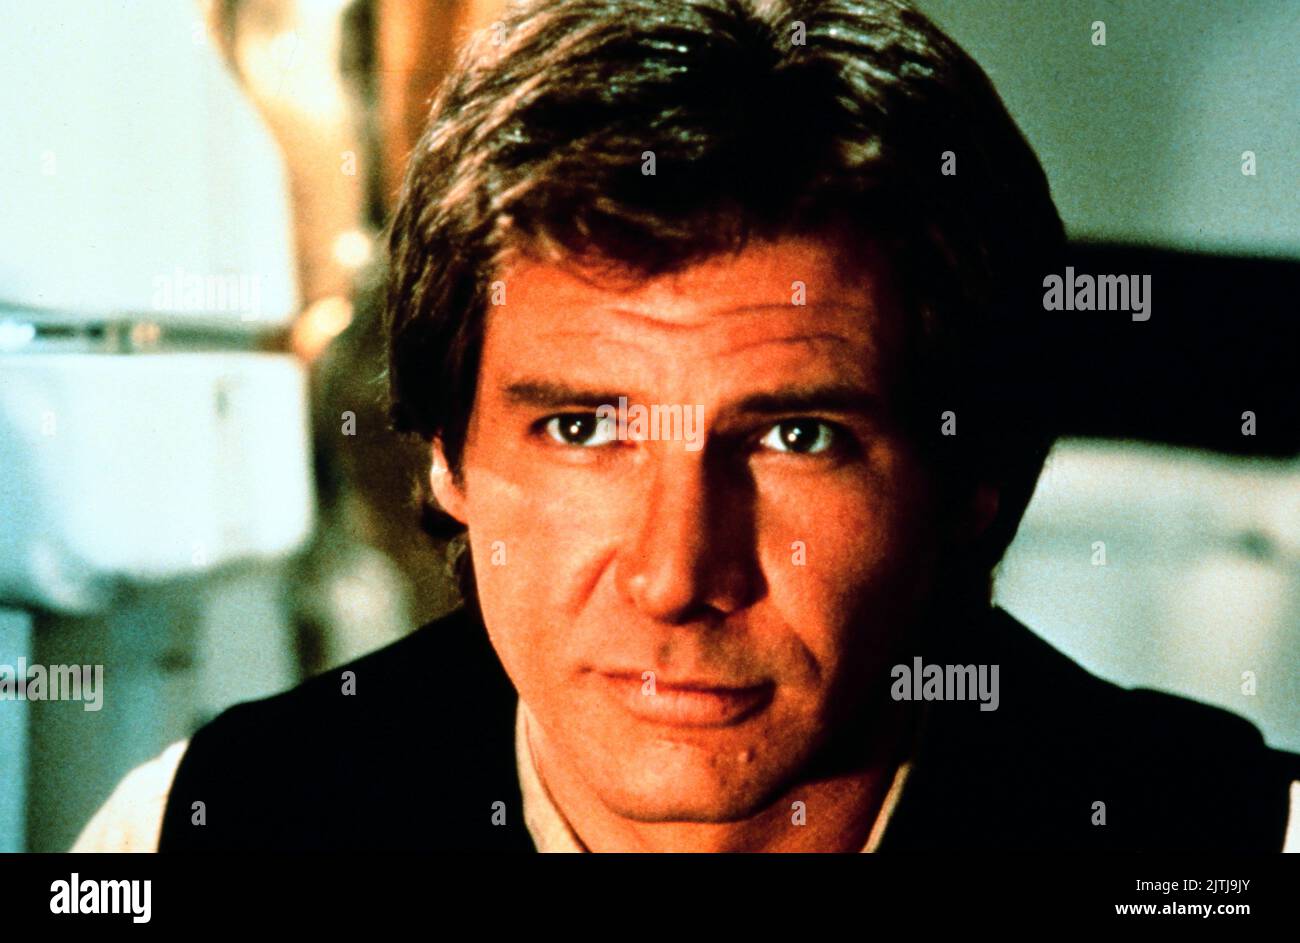 Star Wars, aka Krieg der Sterne, USA 1977, Regie: George Lucas, Darsteller: Harrison Ford als Han Solo Banque D'Images